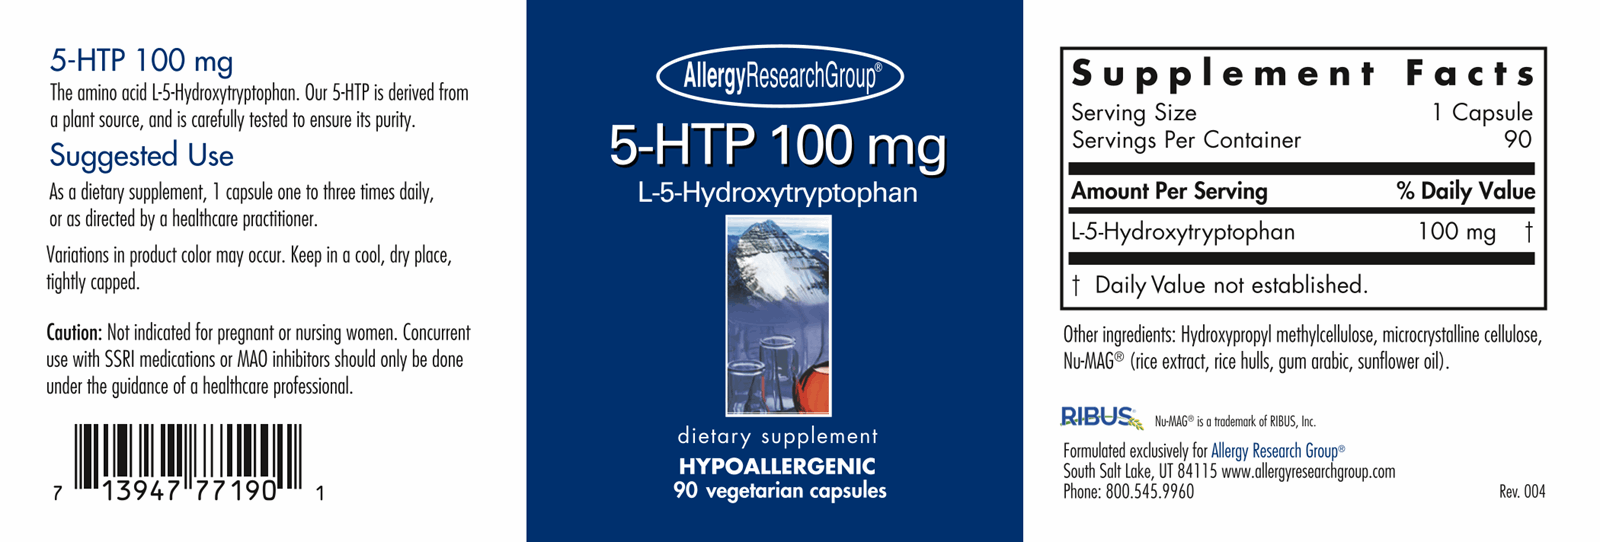 5-HTP 100 mg 